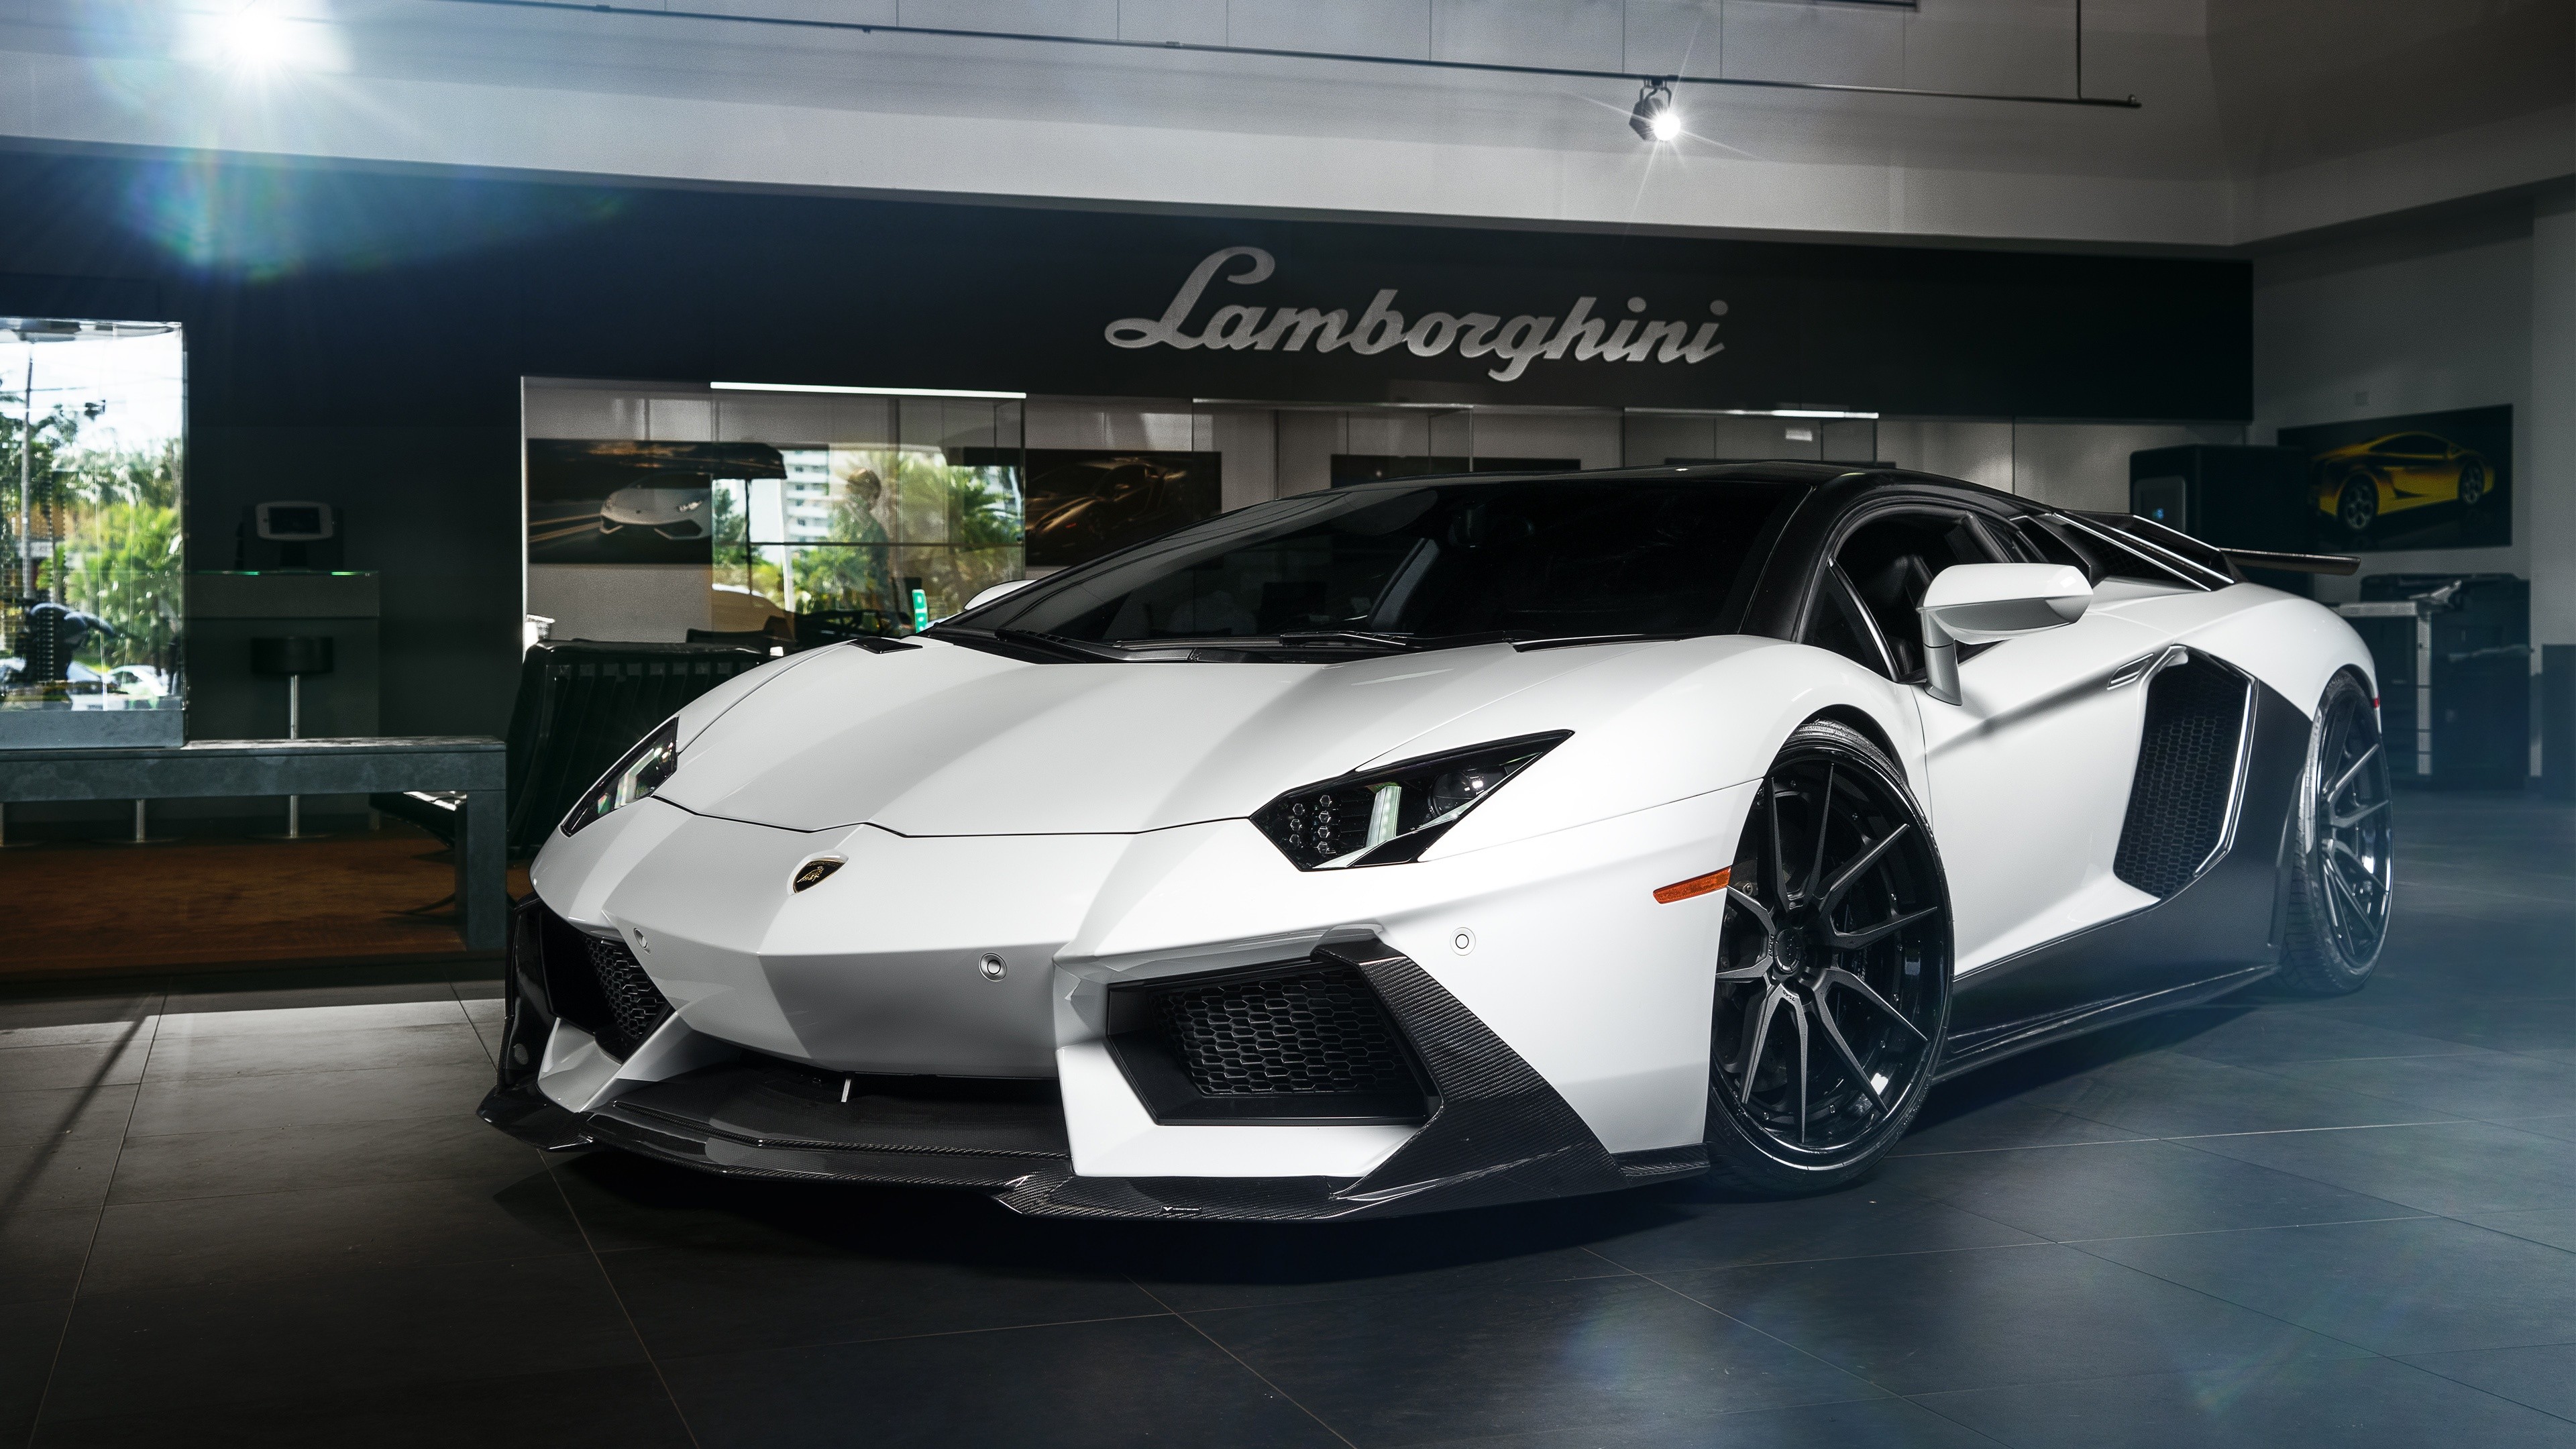 3840x2160 Lamborghini Wallpapers High Resolution